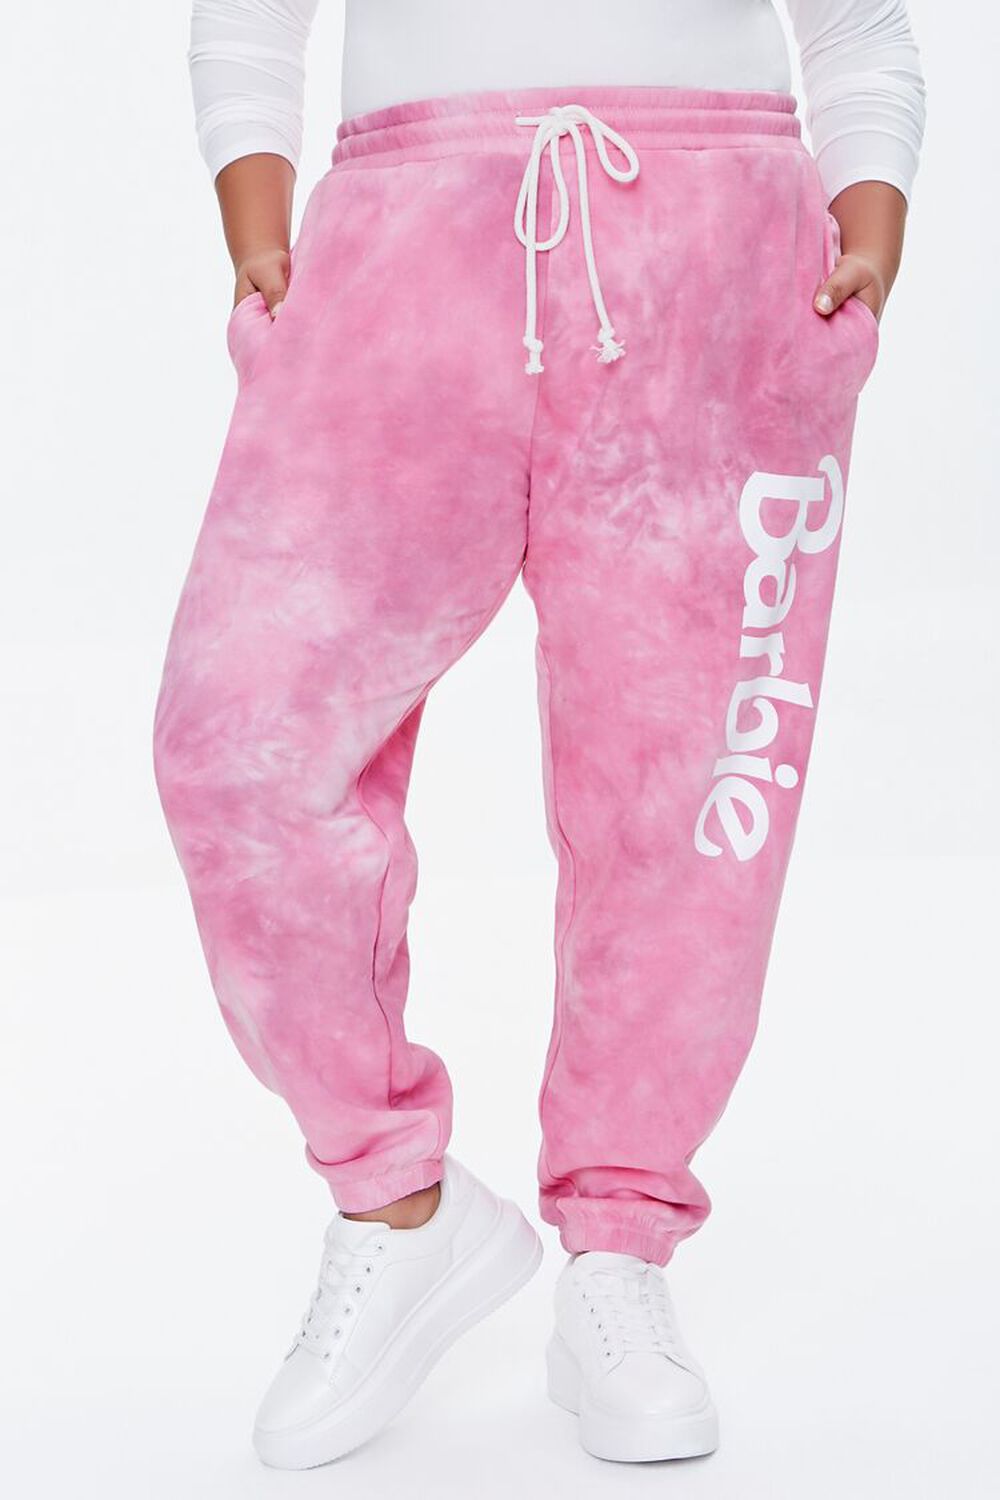 Time & Tru Tie Dye Joggers Sweatpants Sizes L & XL Dark Pink Ombre Women's  NEW